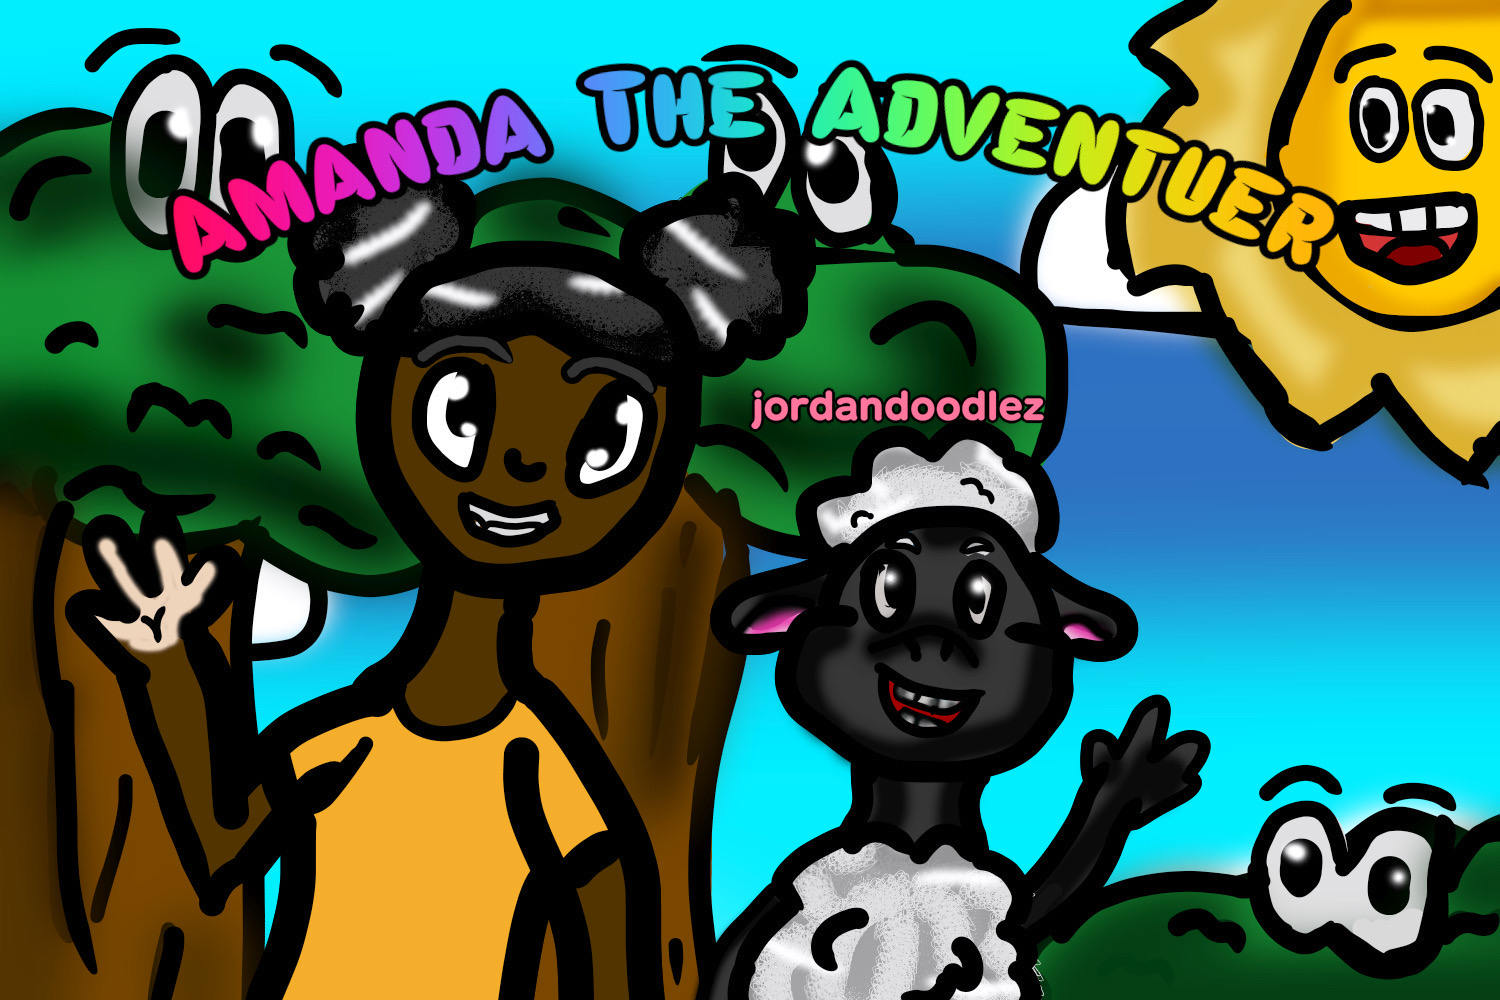 Amanda the adventurer fanart : r/amandatheadventurer